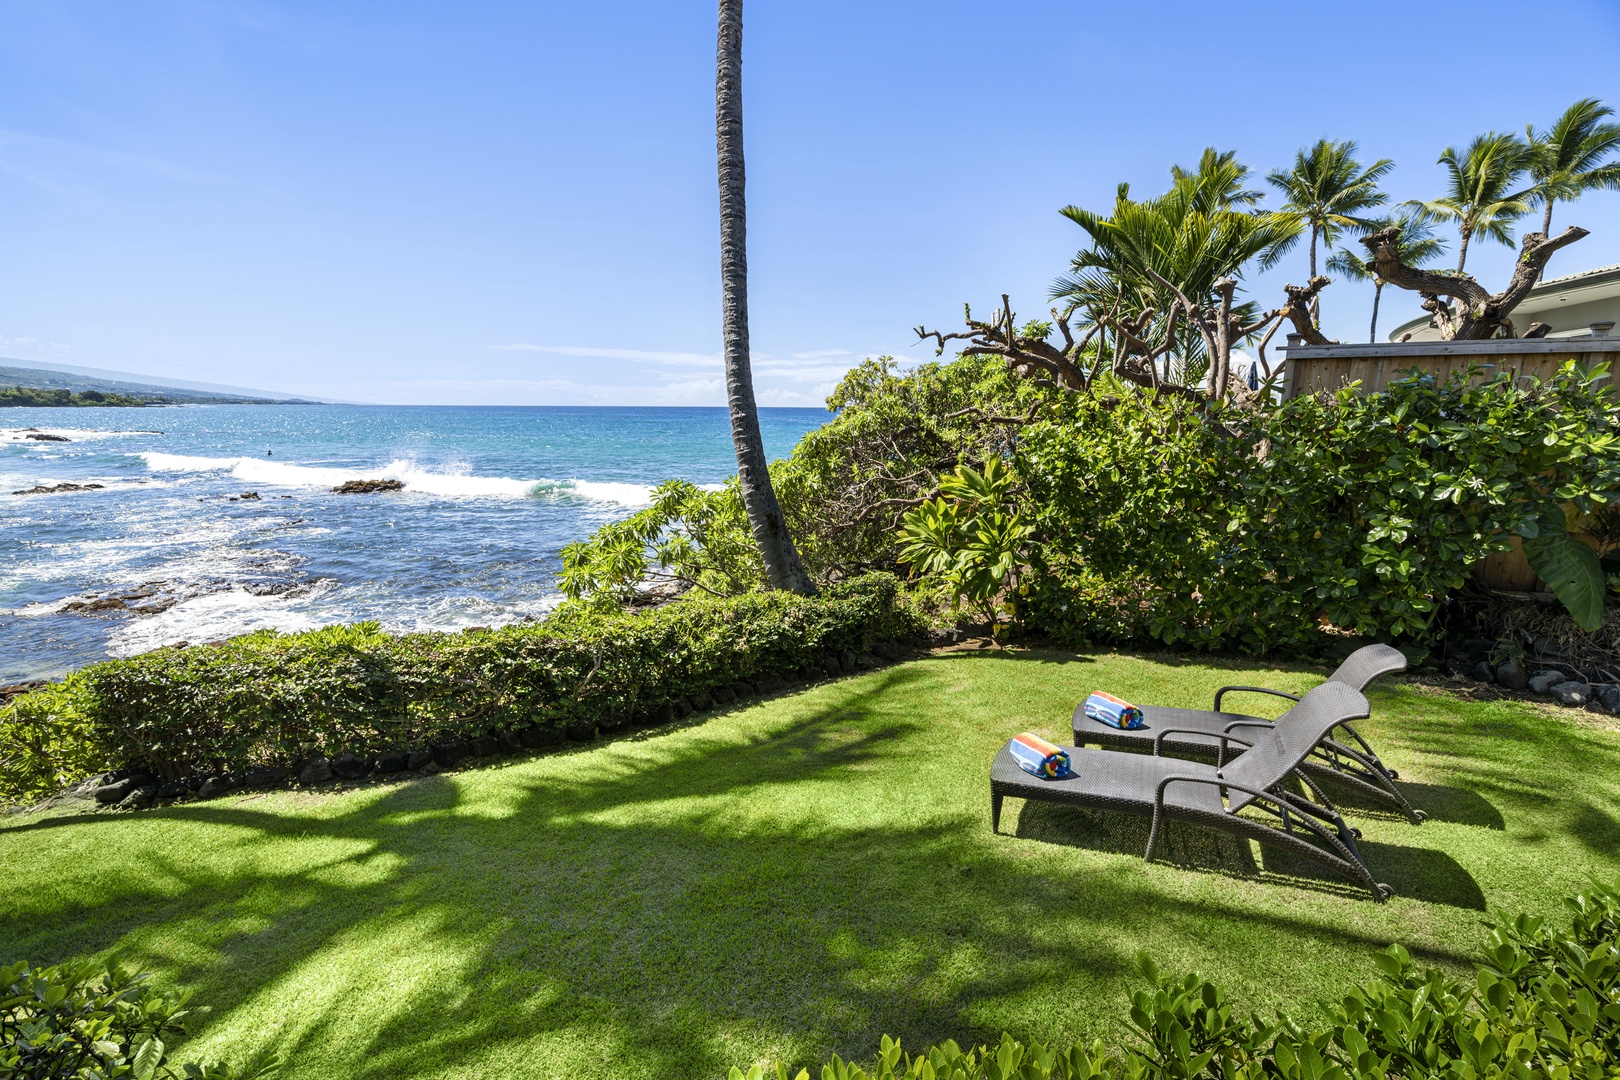 Kailua Kona Vacation Rentals, Ali'i Point #7 - Lounge by the Ocean